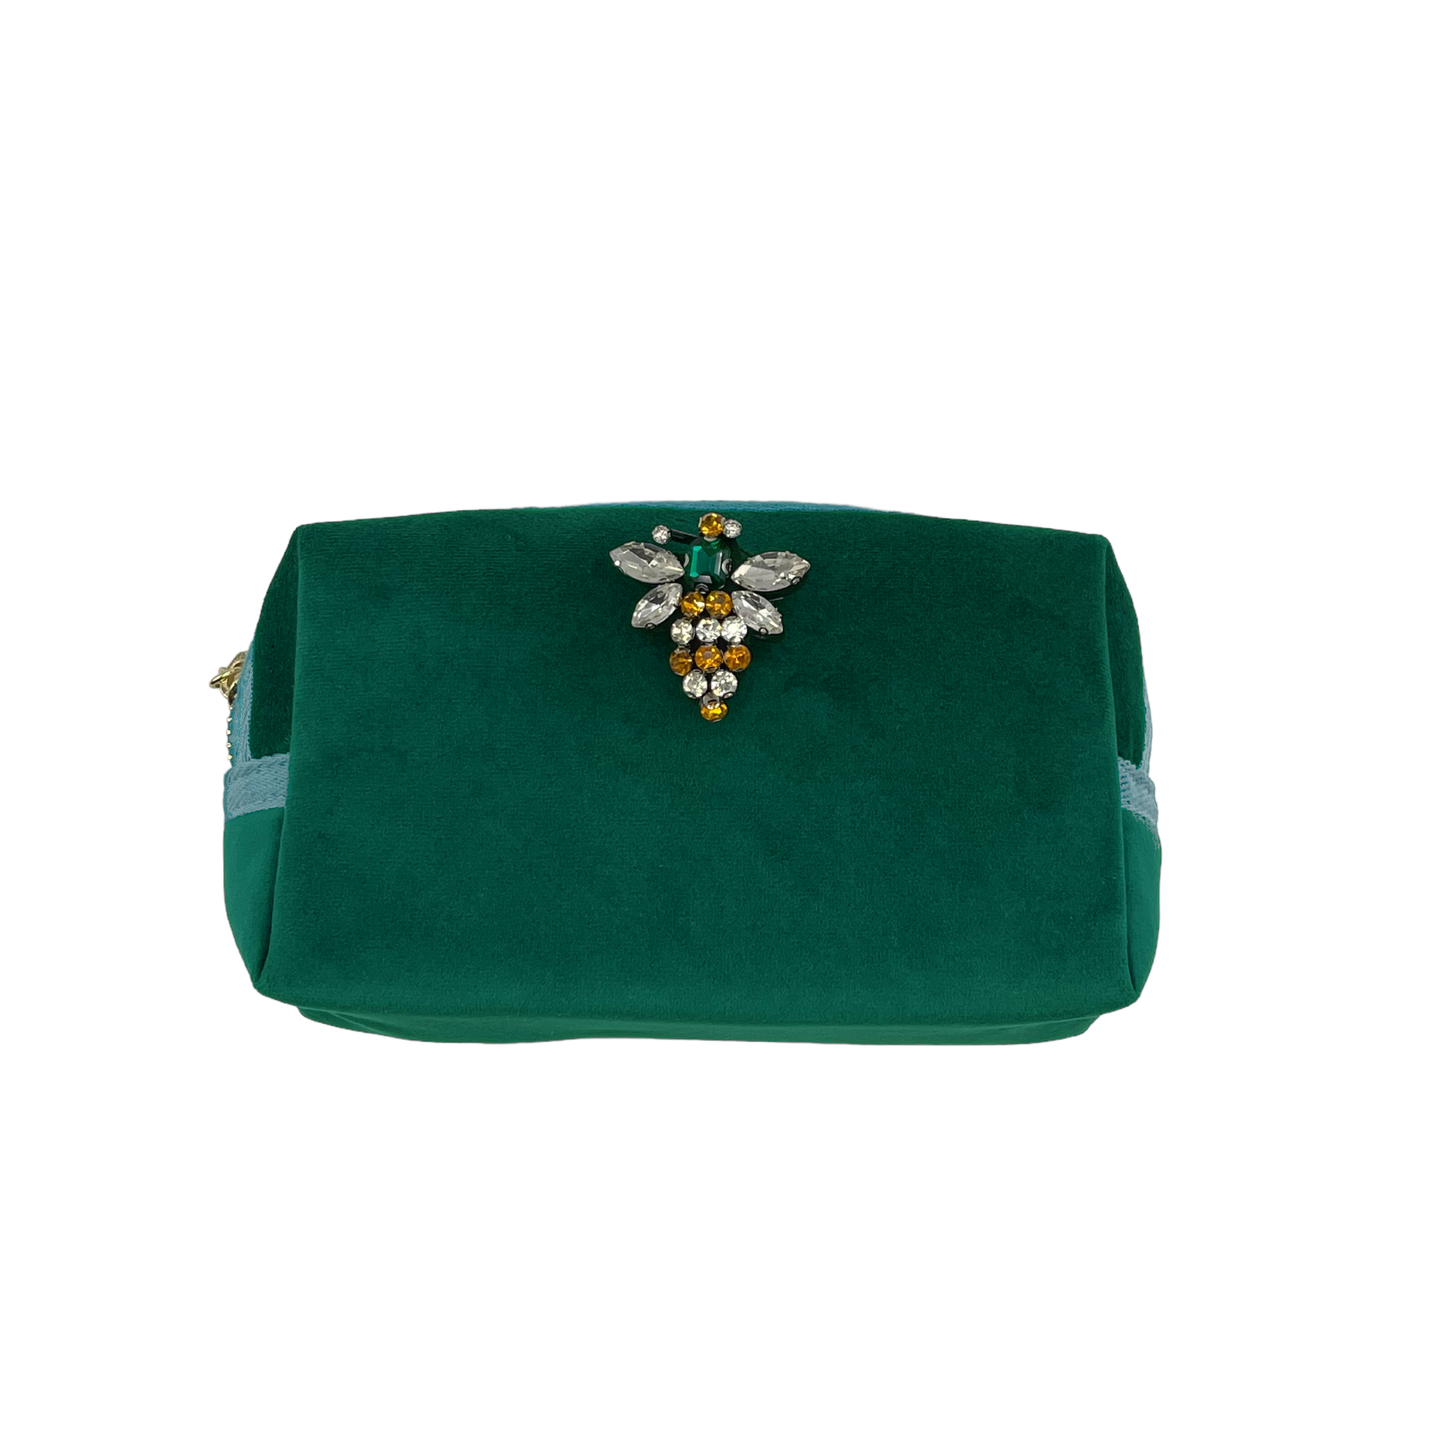 Green make-up bag & queen bee pin - recycled velvet